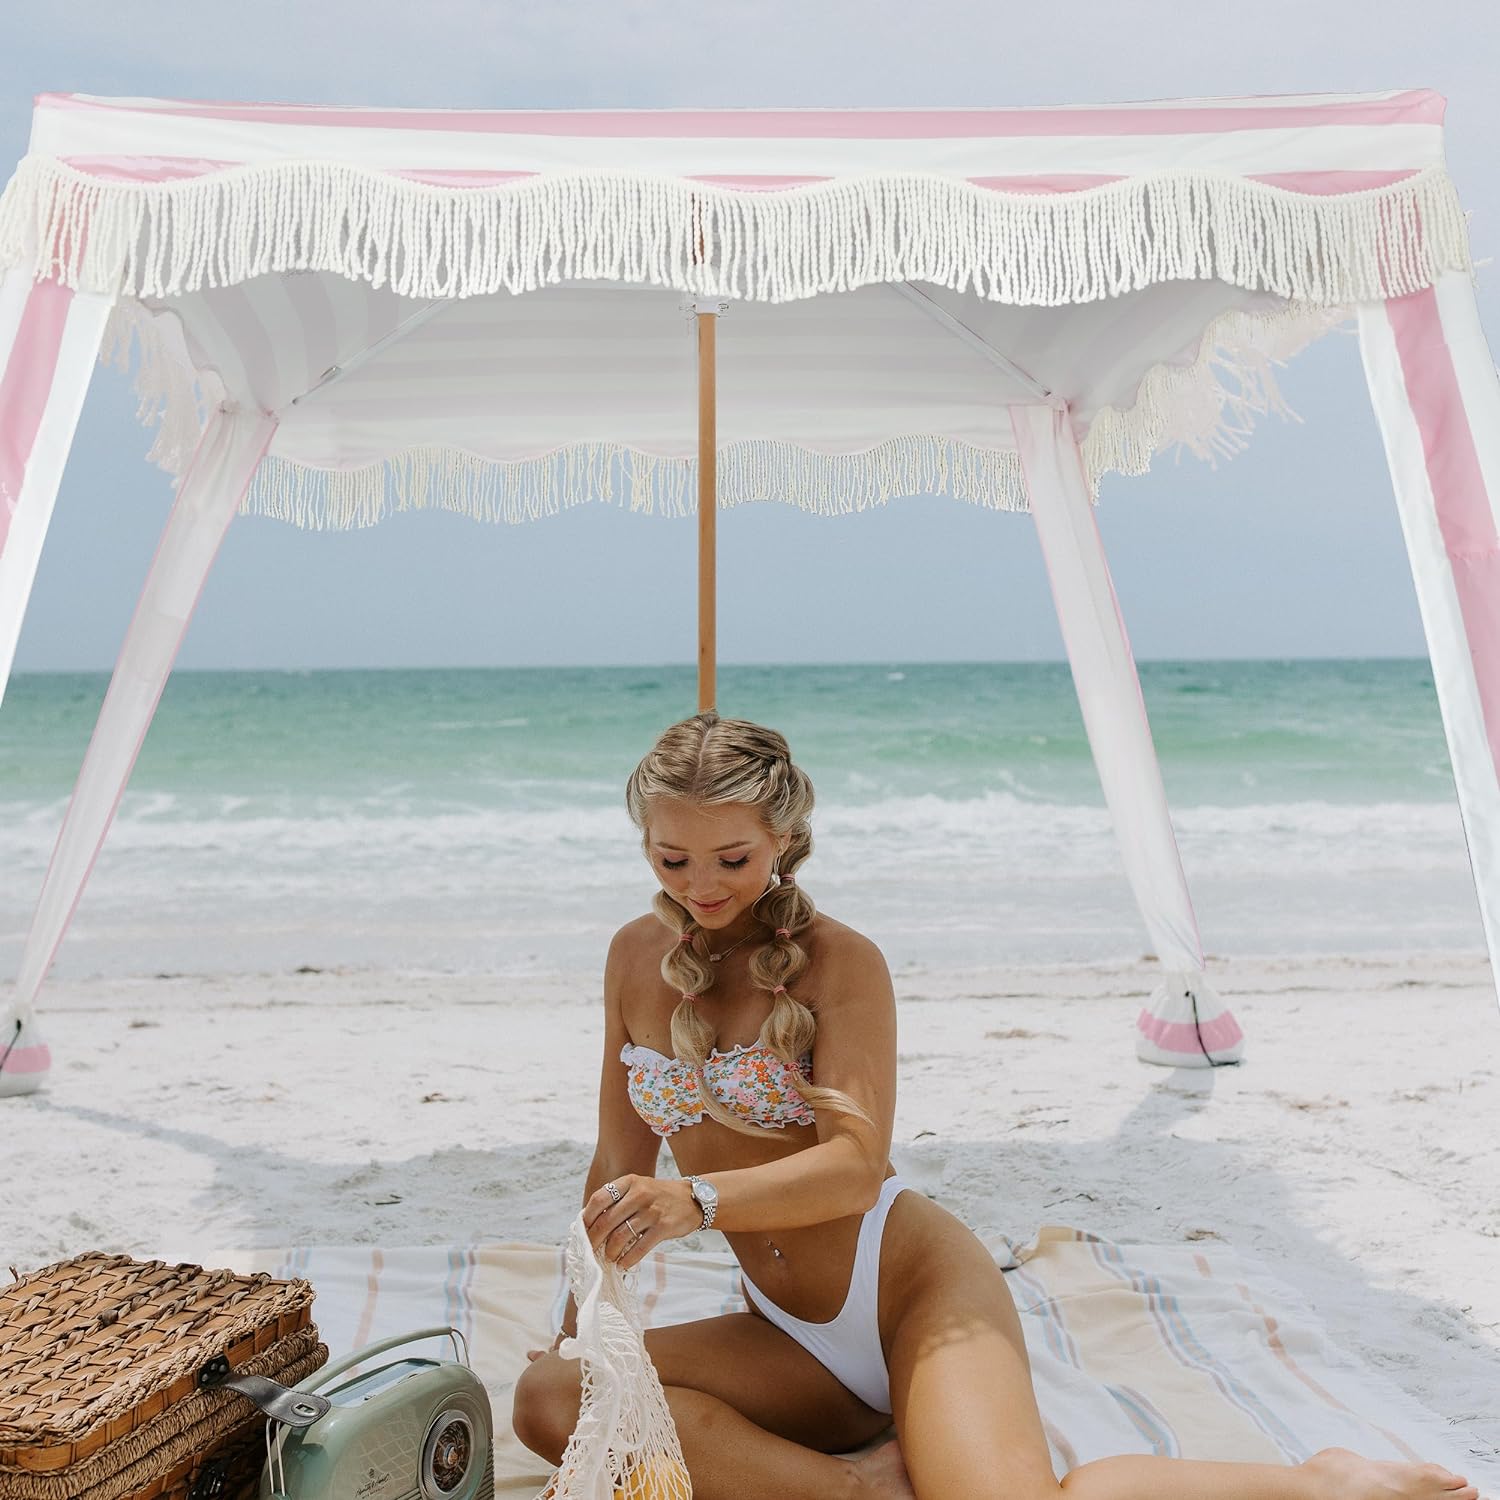 AMMSUN 6'×6' Bobo Beach Cabana with Fringe Pink Stripe